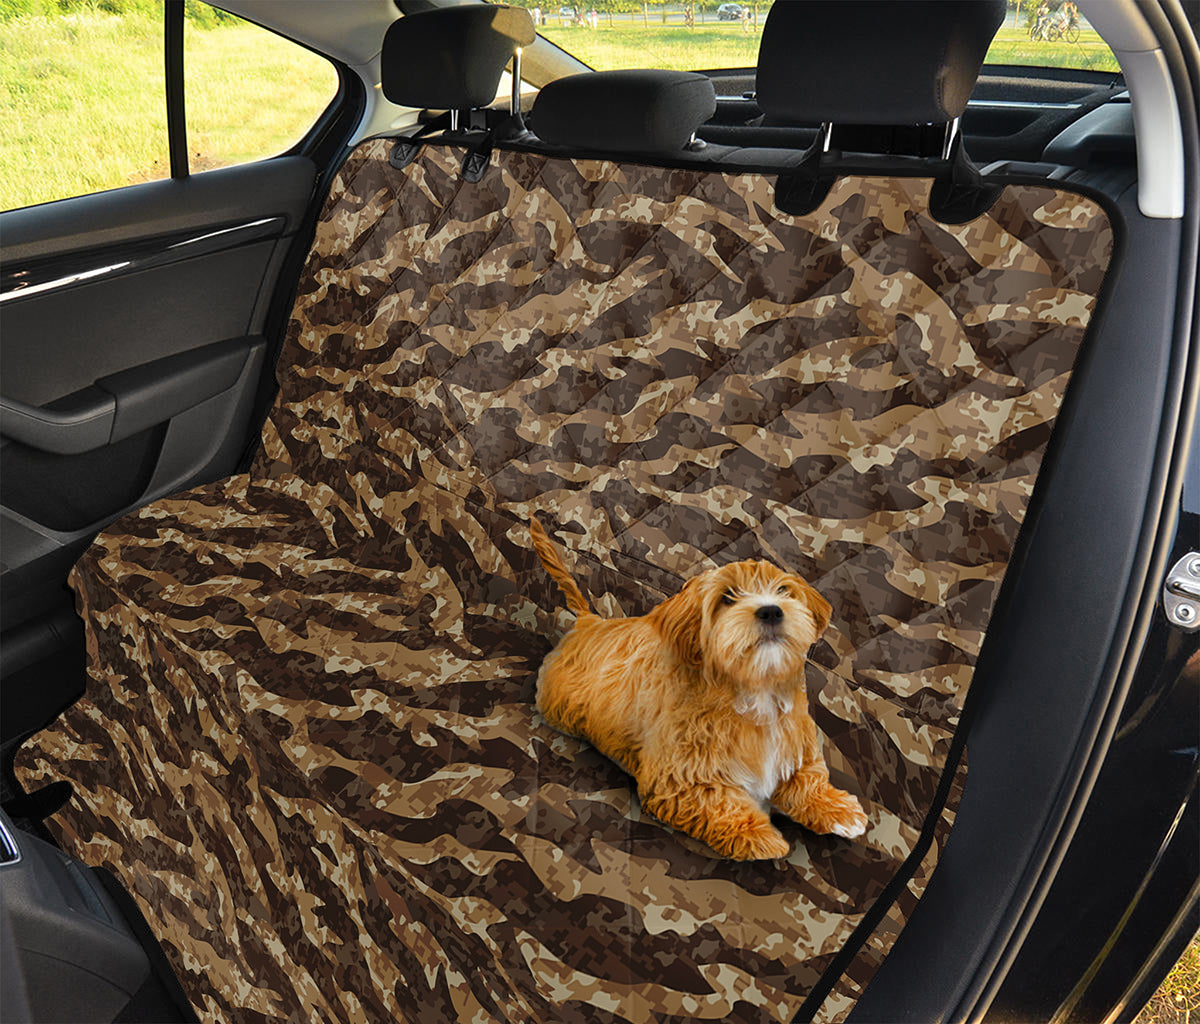 Desert Tiger Stripe Camouflage Print Pet Car Back Seat Cover